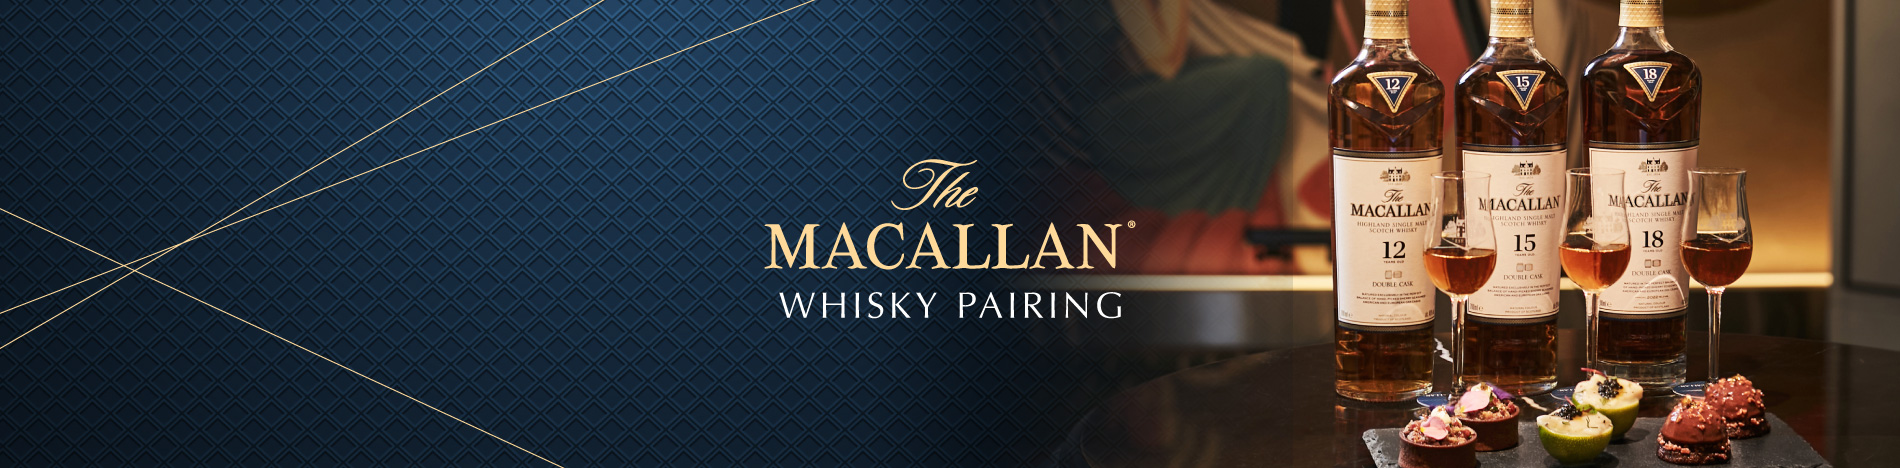 Macallan Whisky header